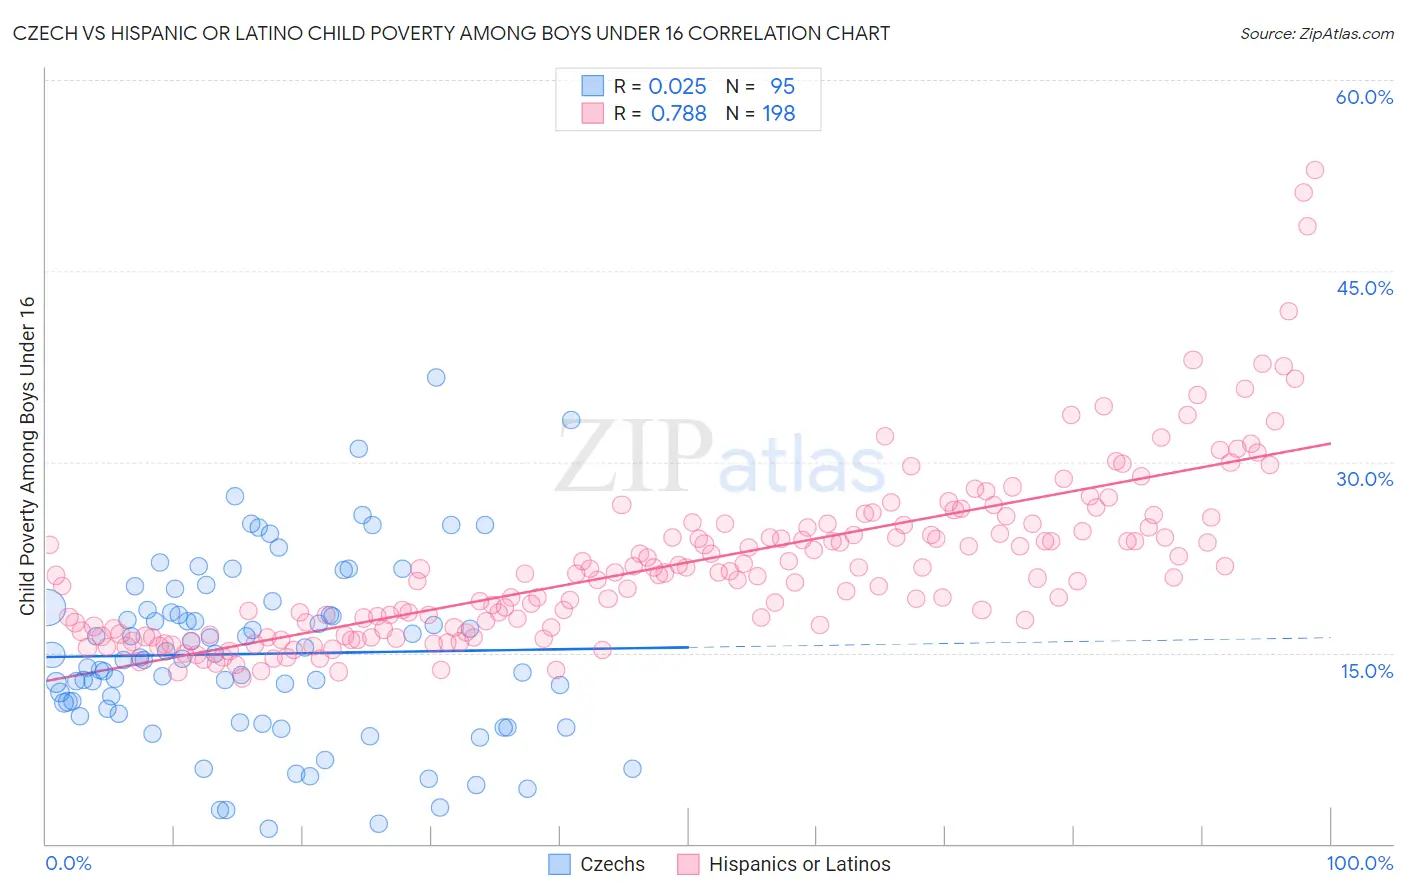 Czech vs Hispanic or Latino Child Poverty Among Boys Under 16